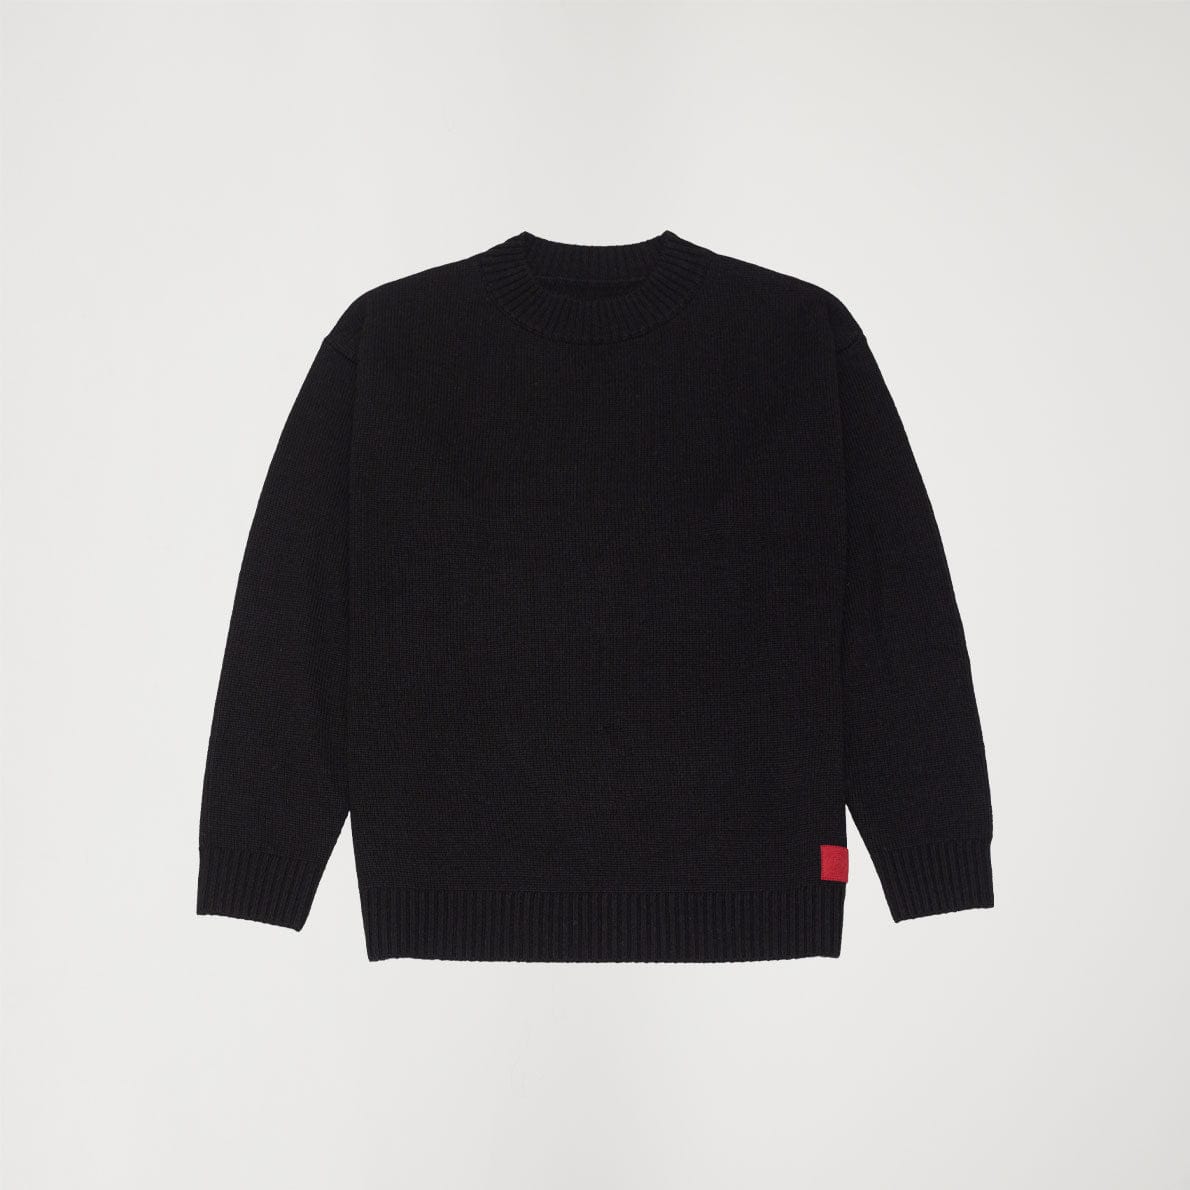 SilKnit™ Unisex Sweater